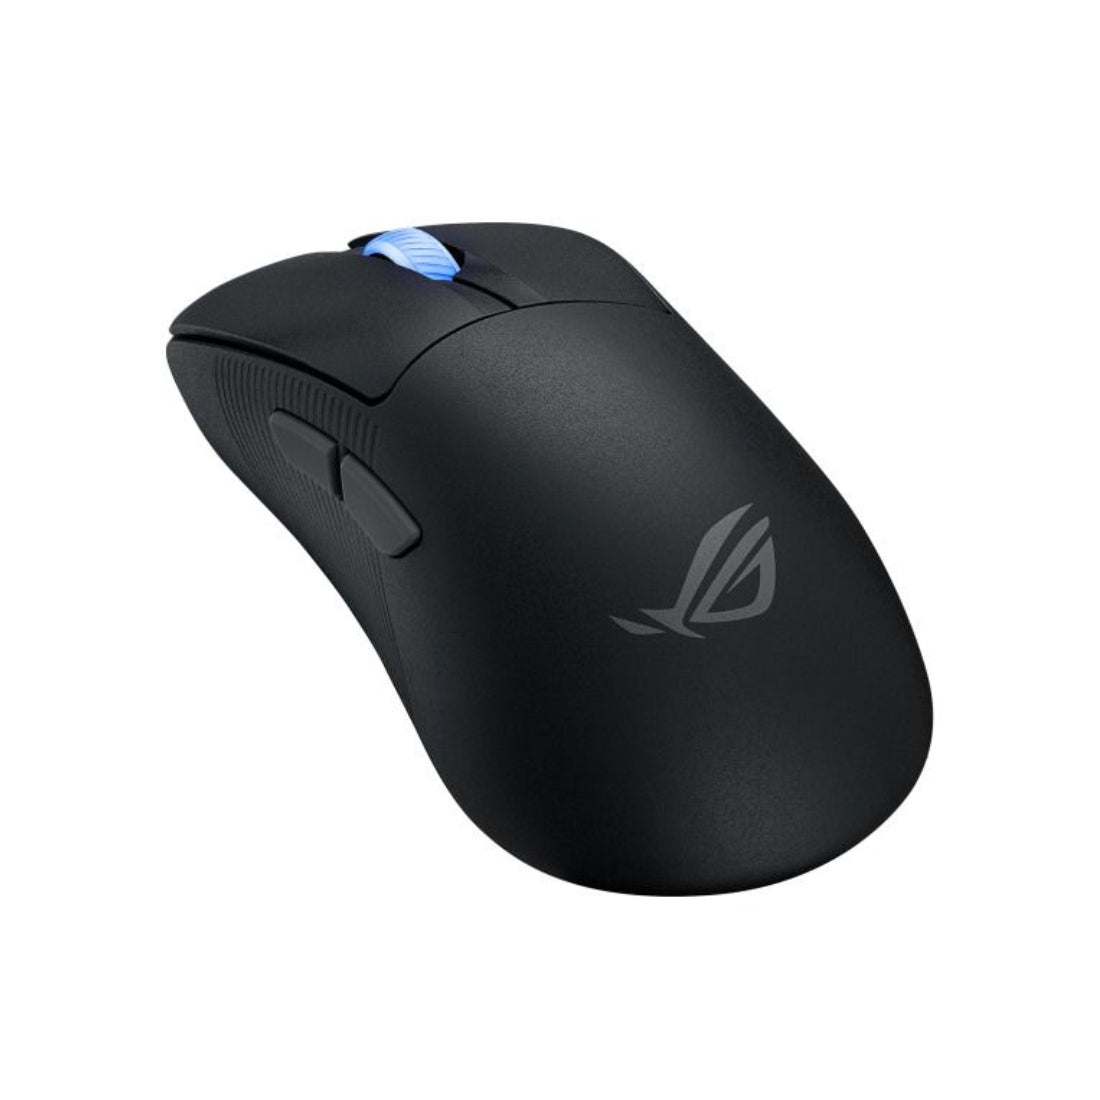 Asus ROG Keris II Ace Wireless Gaming Mouse - Black - فأرة